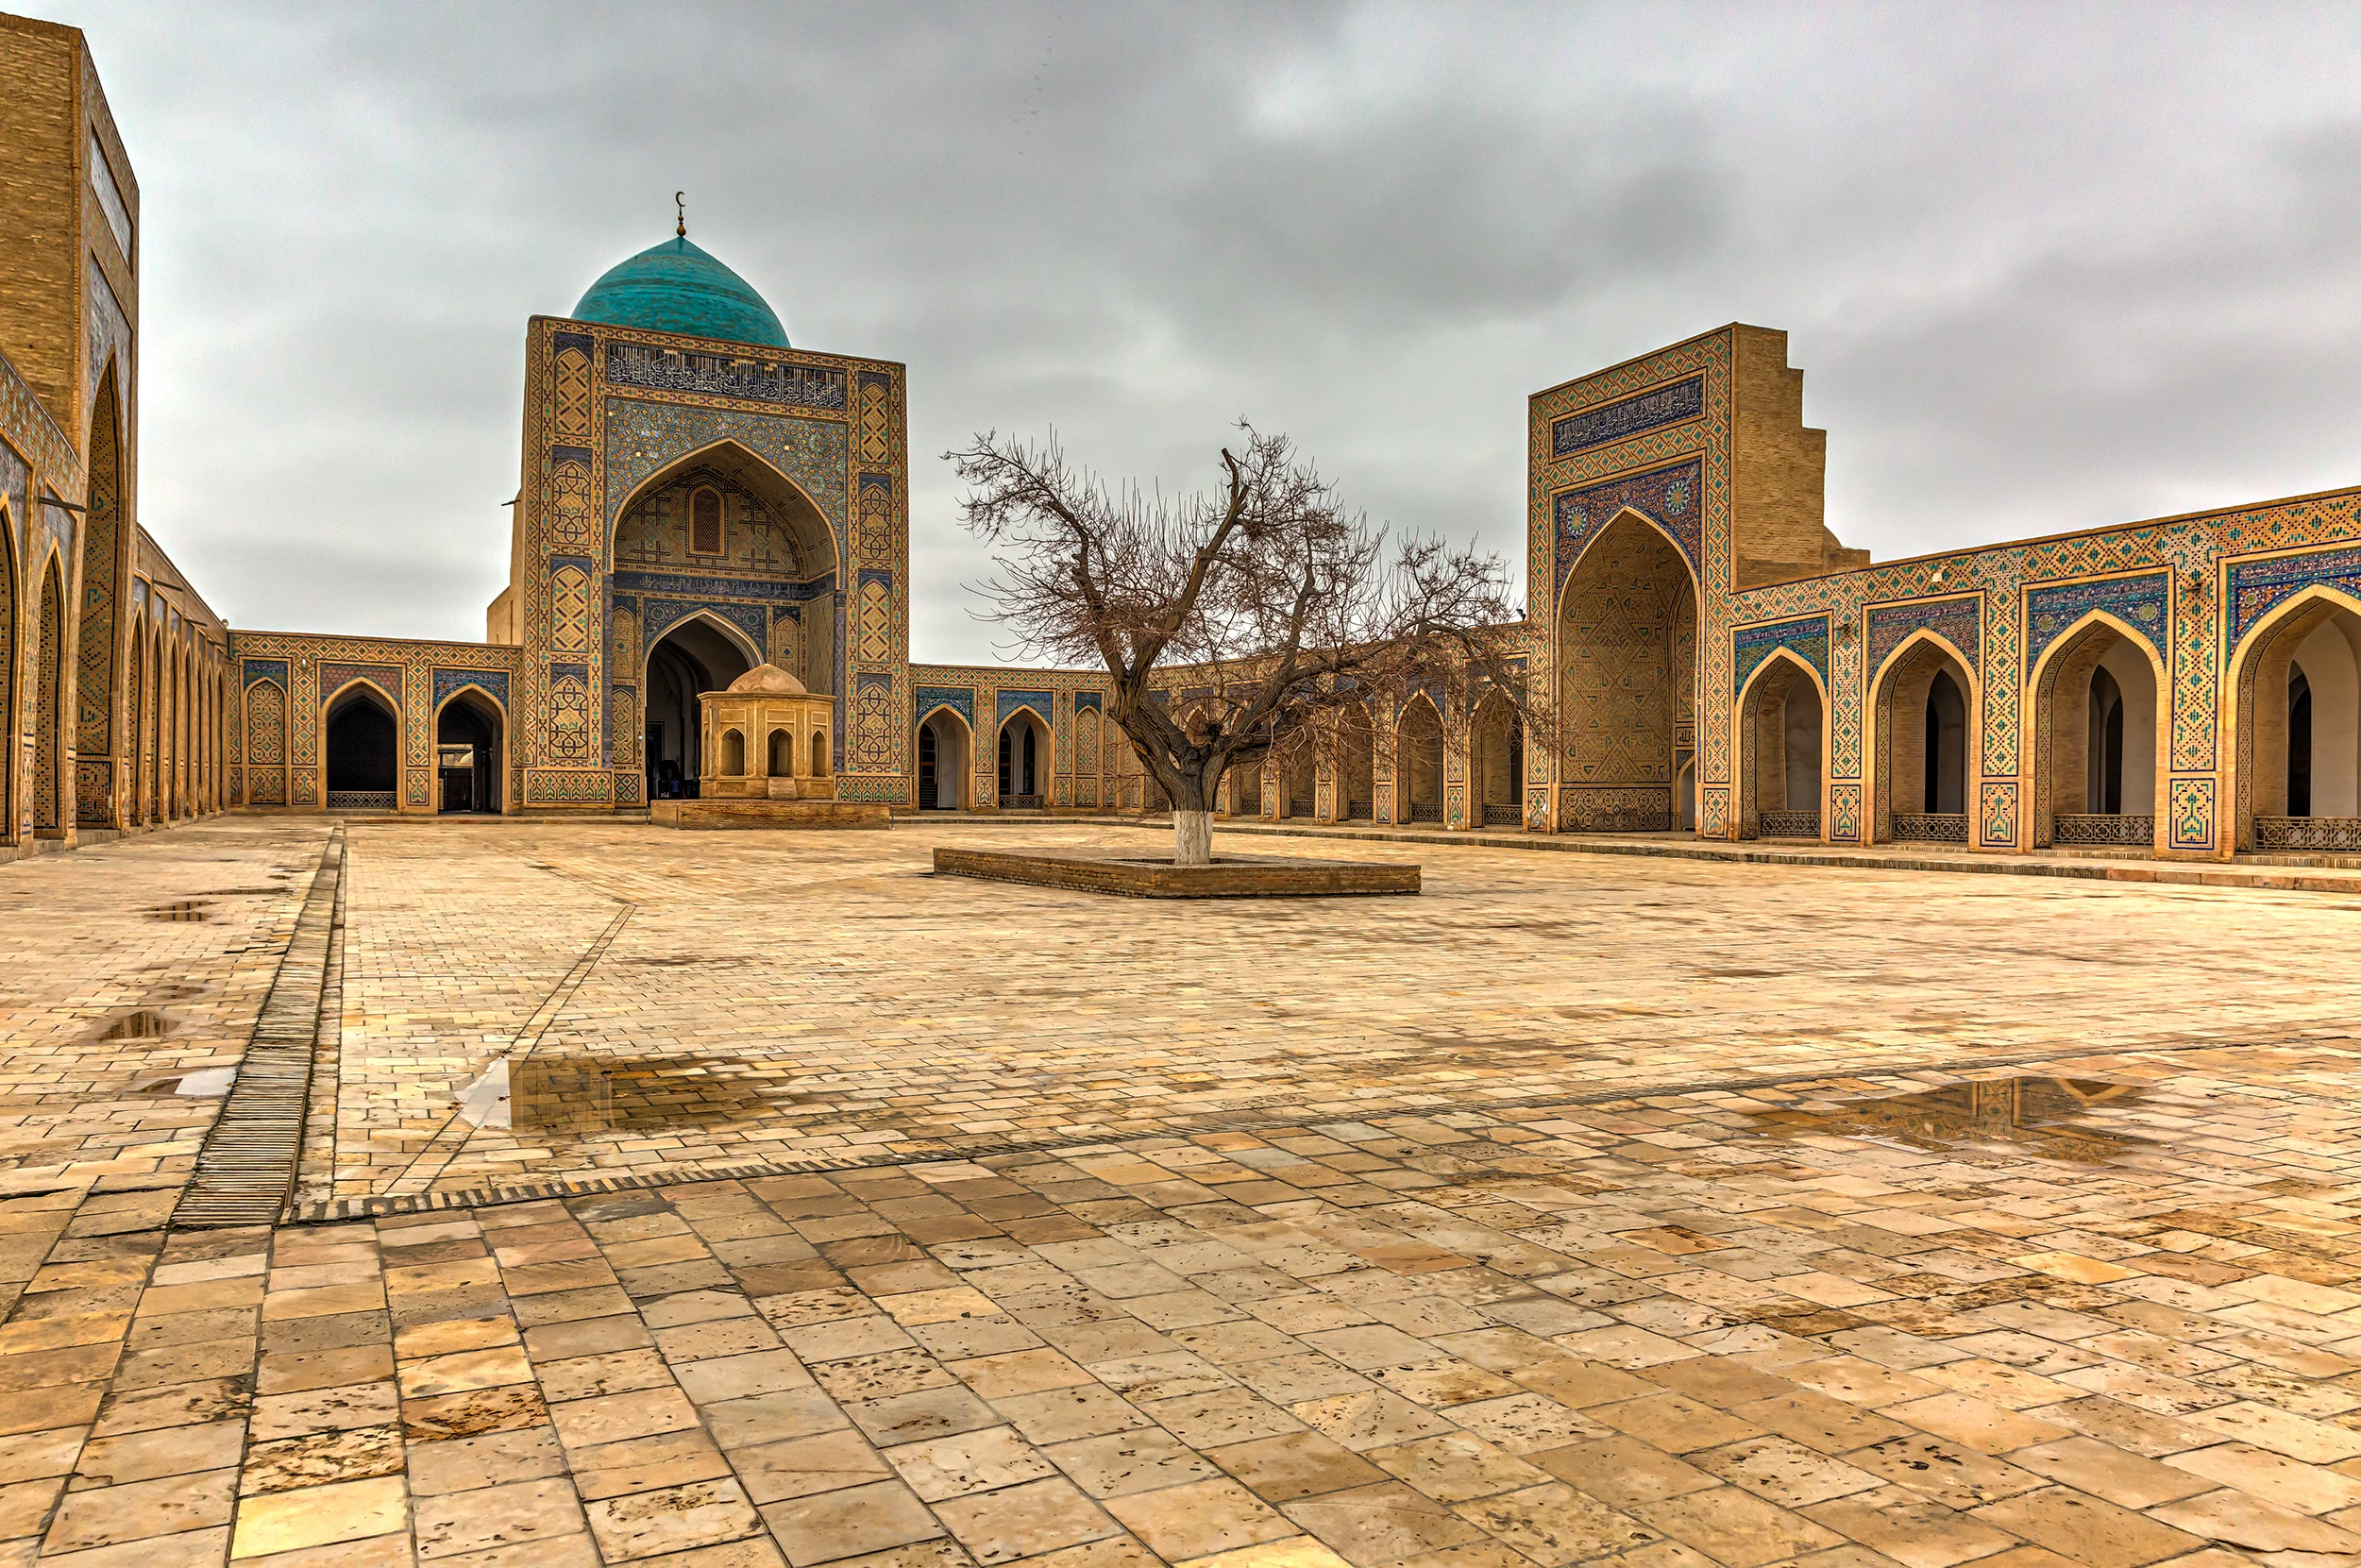 Bukhara Ark. Winter